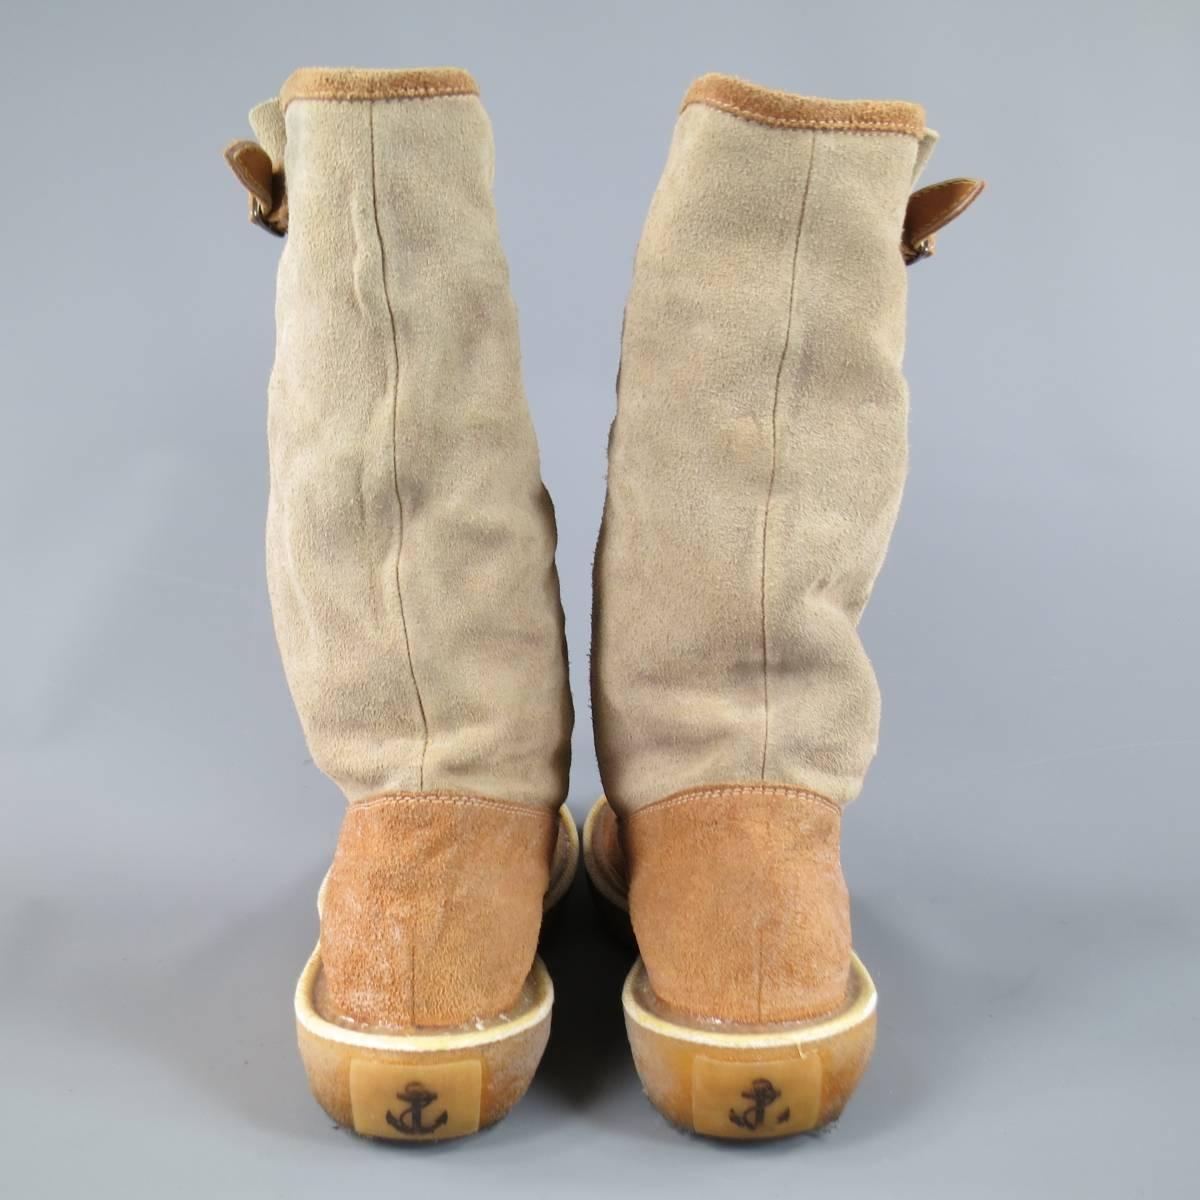 Men's KAPITAL Size 9 Tan & Gray Suede Calf High Popeye Boots 1